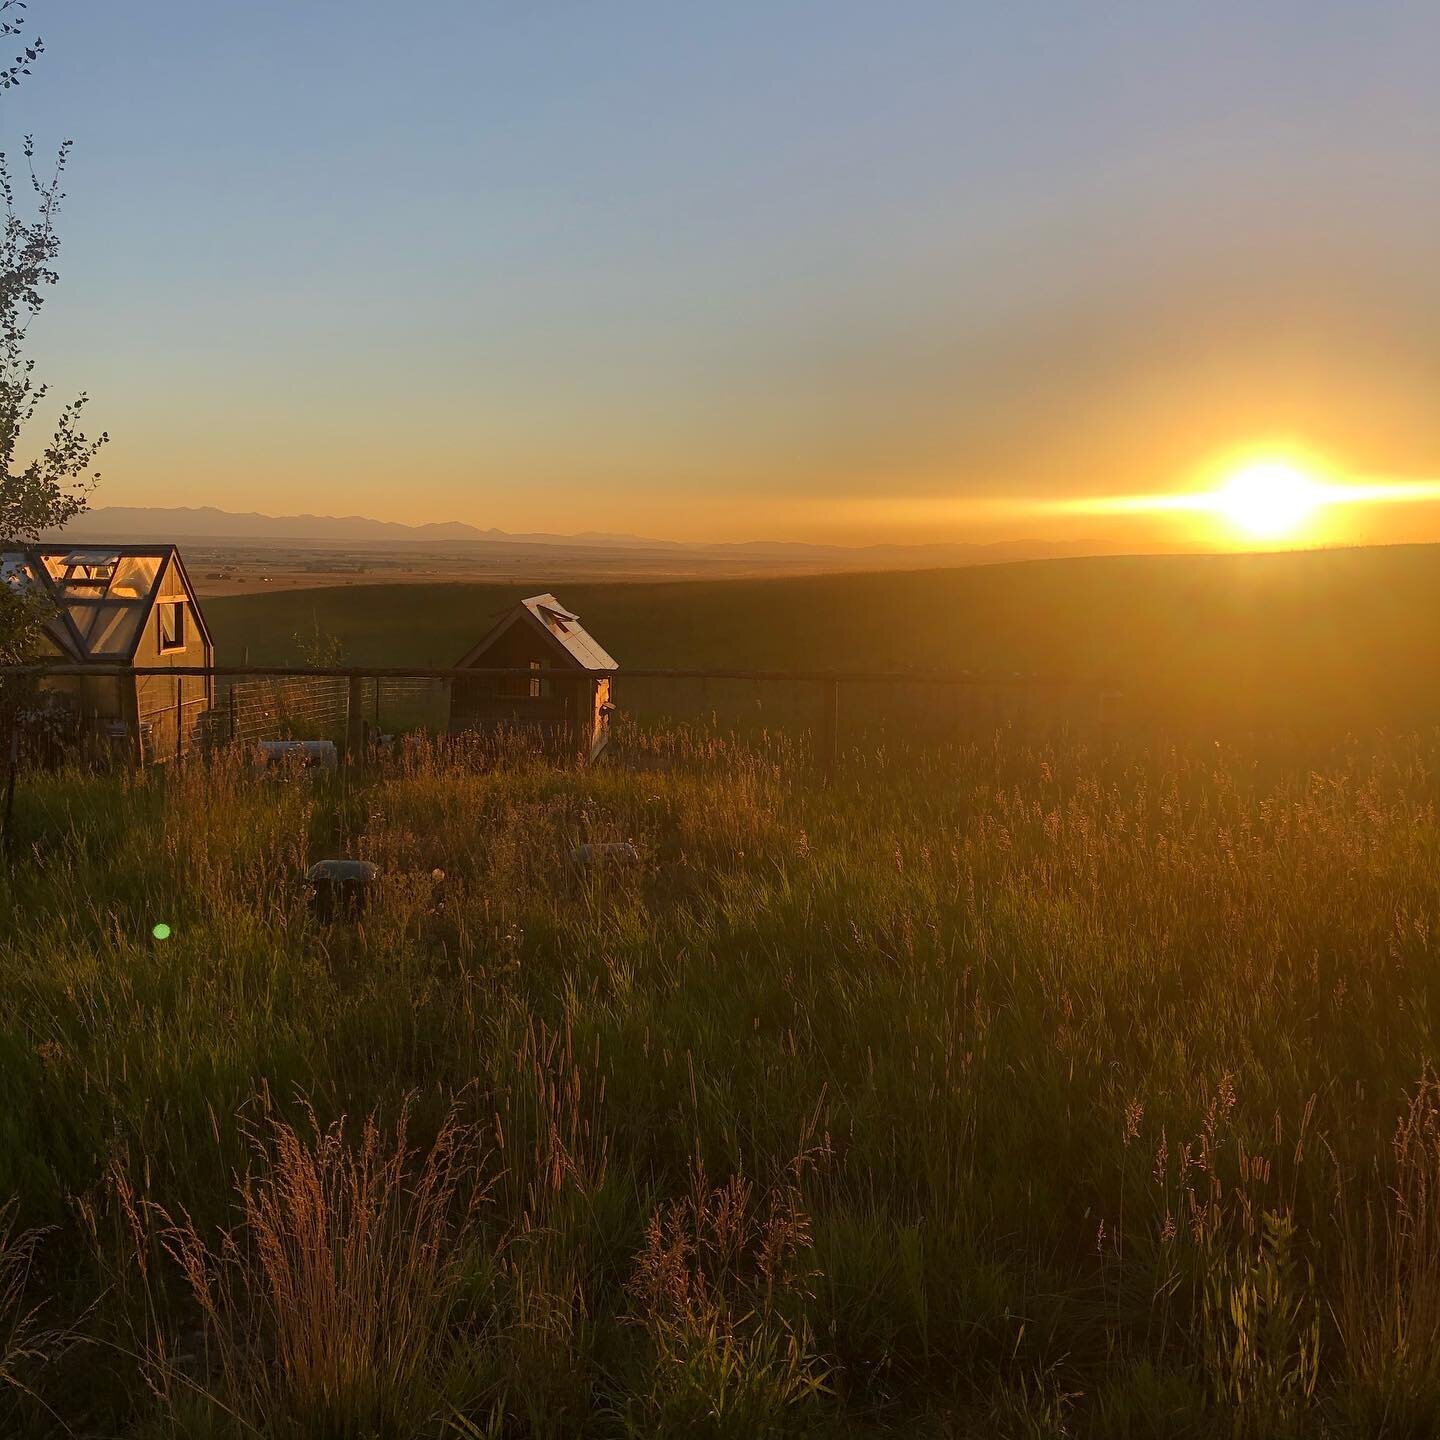 Montana Farm Life 
.
.
.
#chickencoop #greenhouse #sunset #montana #valley #mountainvalley #summertime #summervibes #summer2020 #farm #ranch #land #montanamoment #bozeman #bozemanmontana #bozemanmt #406